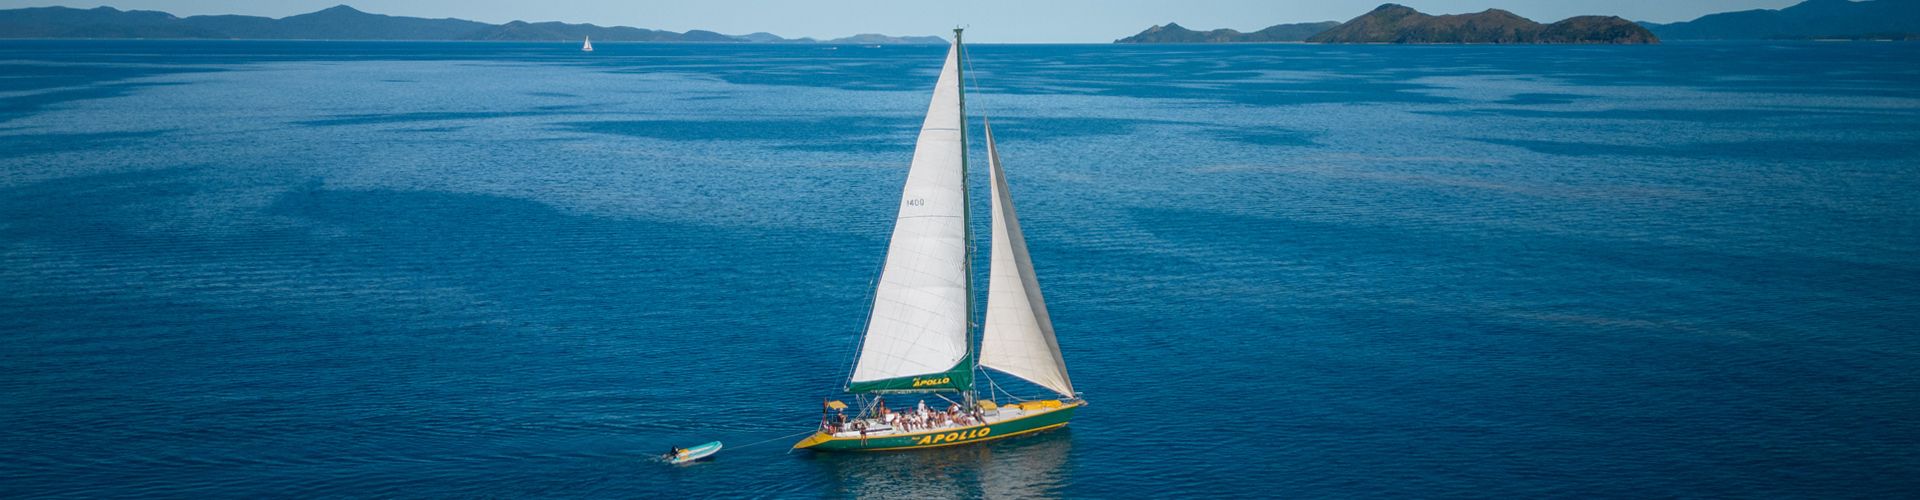 Social Sailing Tours - Sailing Whitsunday Image